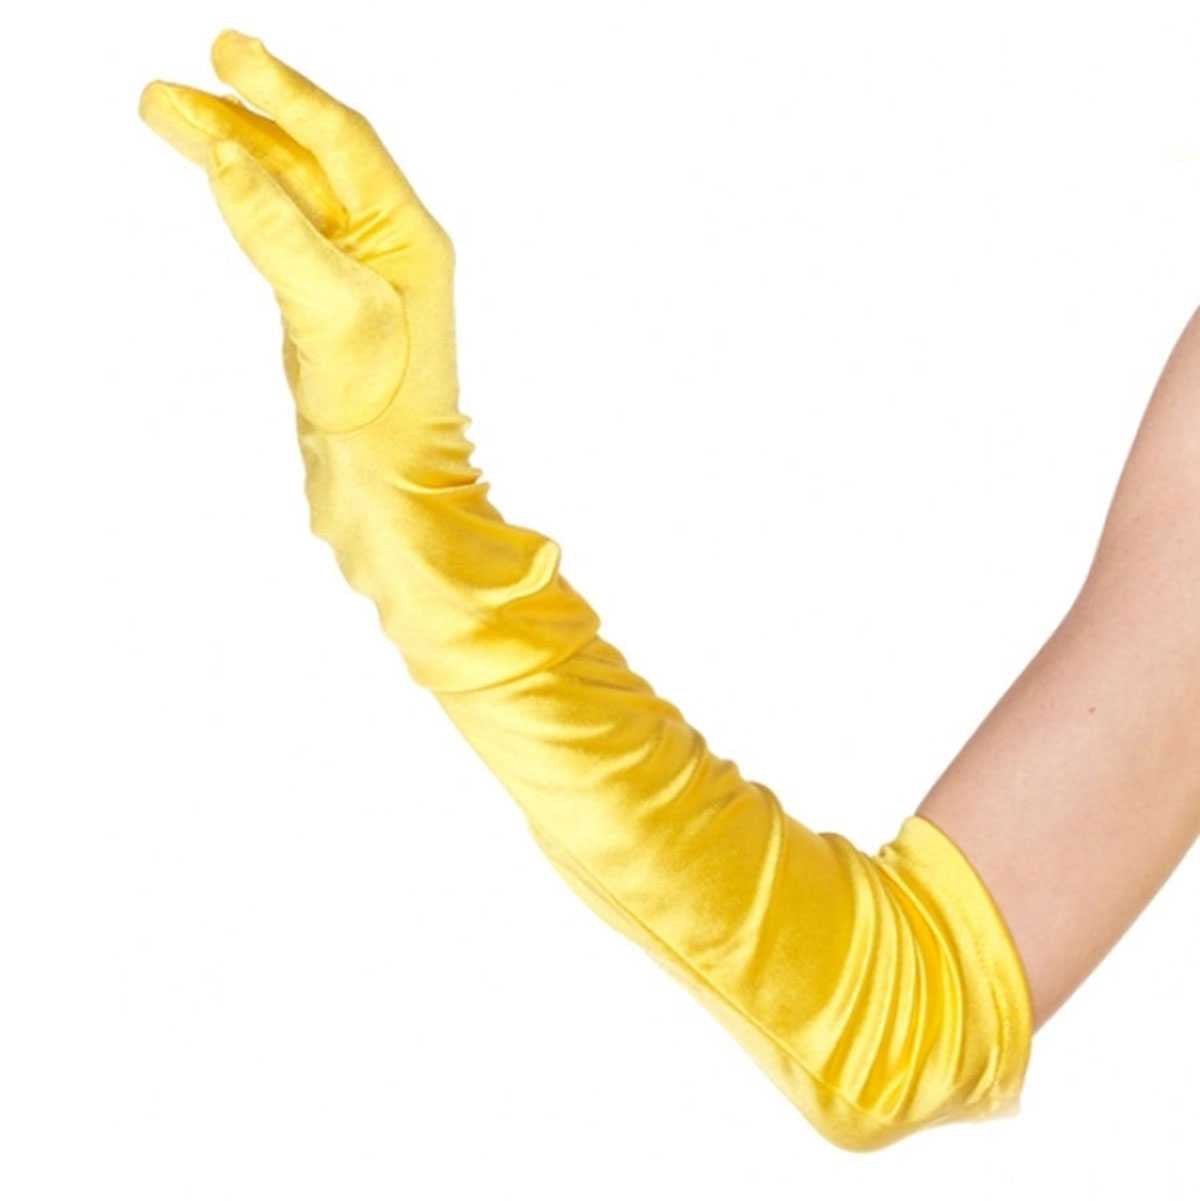 halloween long gloves